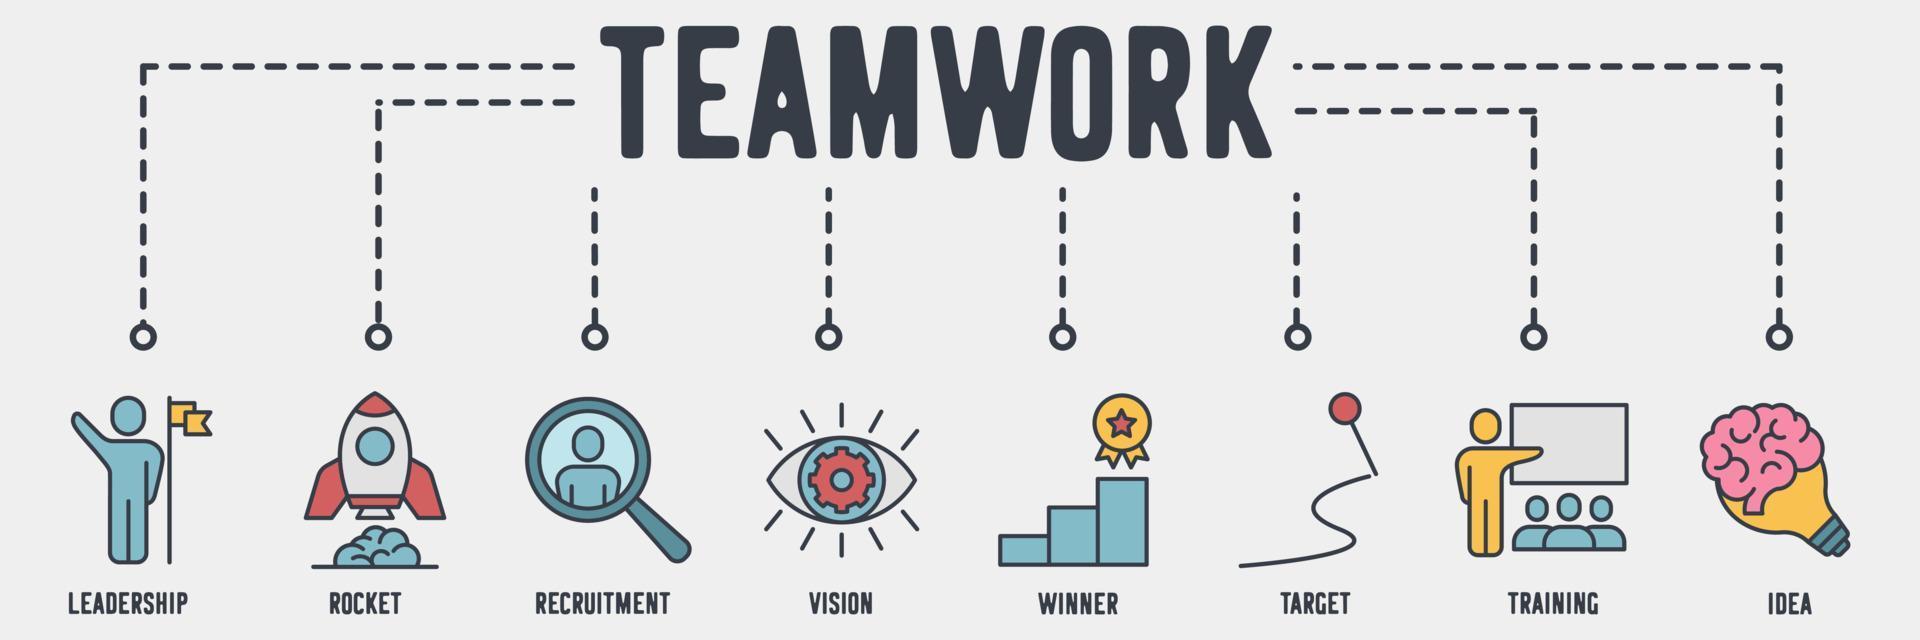 Teamwork banner web icon. leadership, mission rocket, recruitment, vision, winner, target, training, idea vector illustration concept.